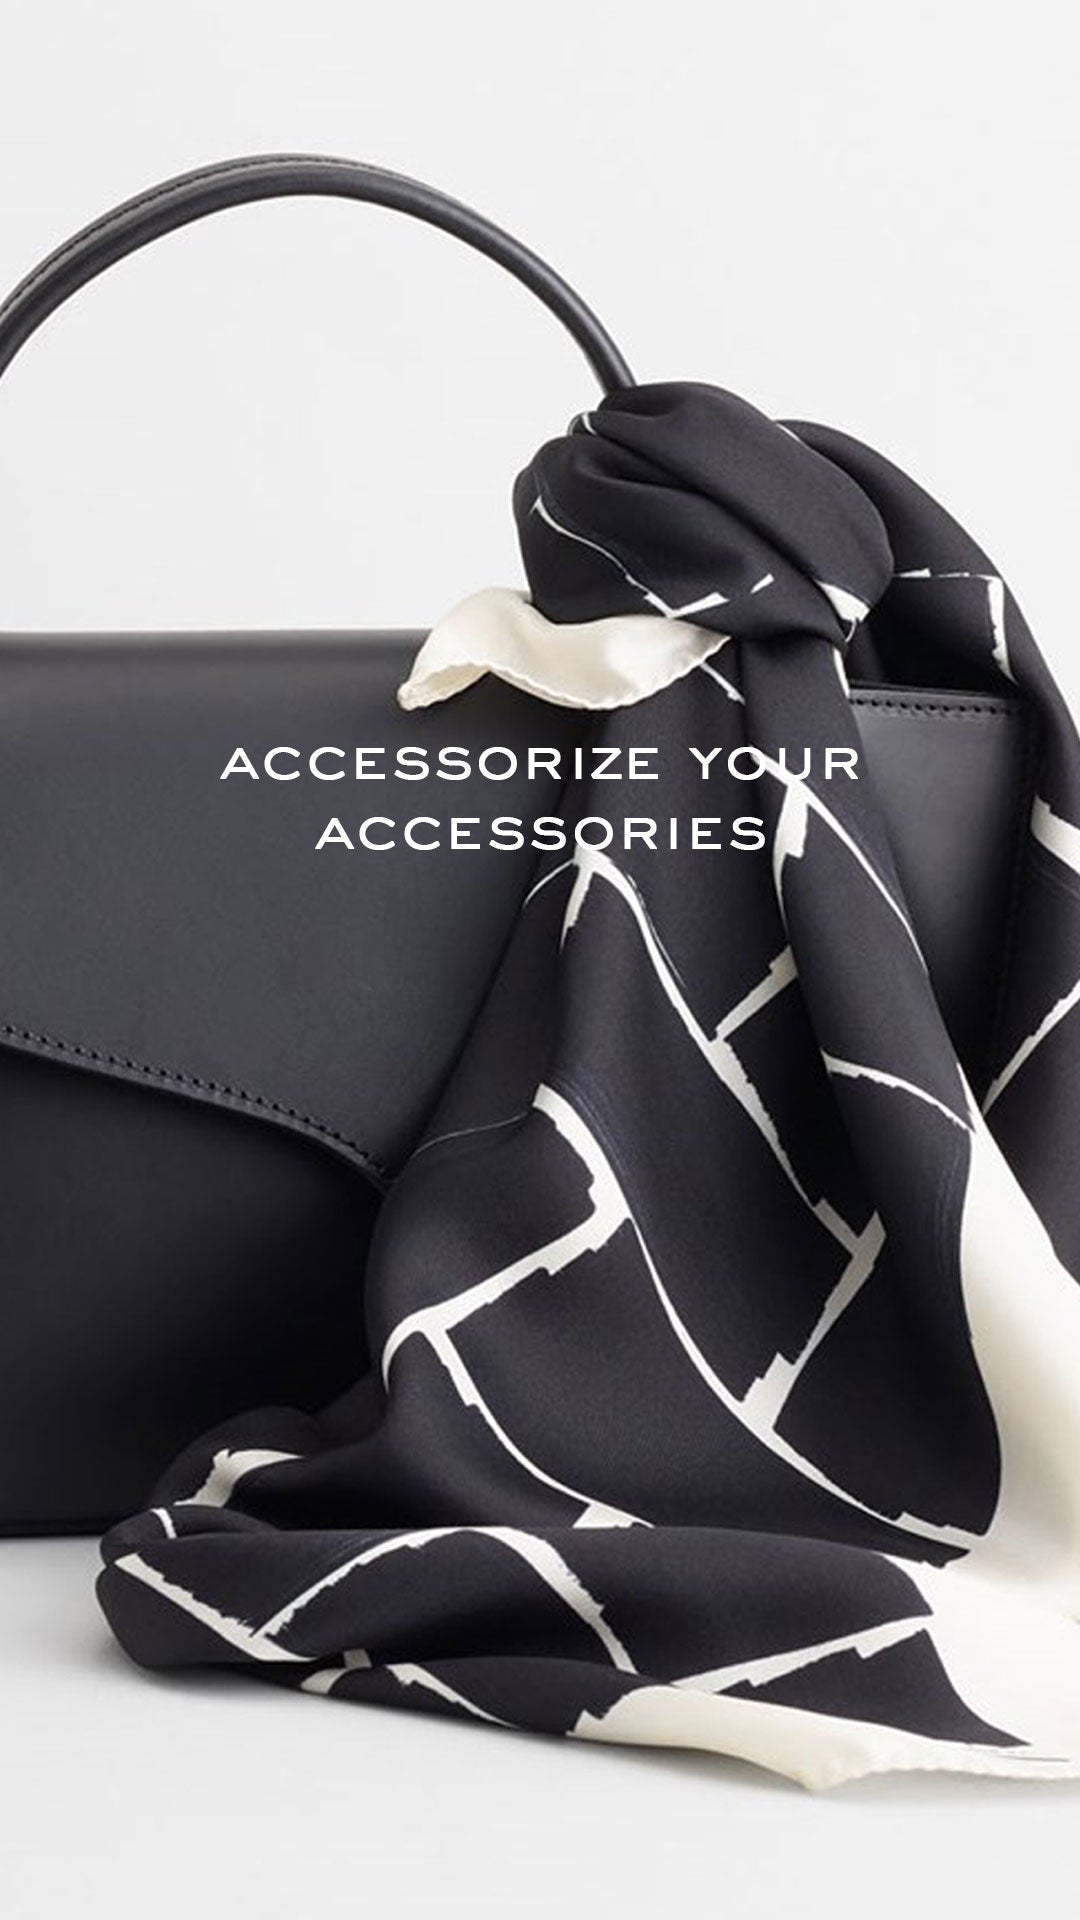 Accessorise your accessories